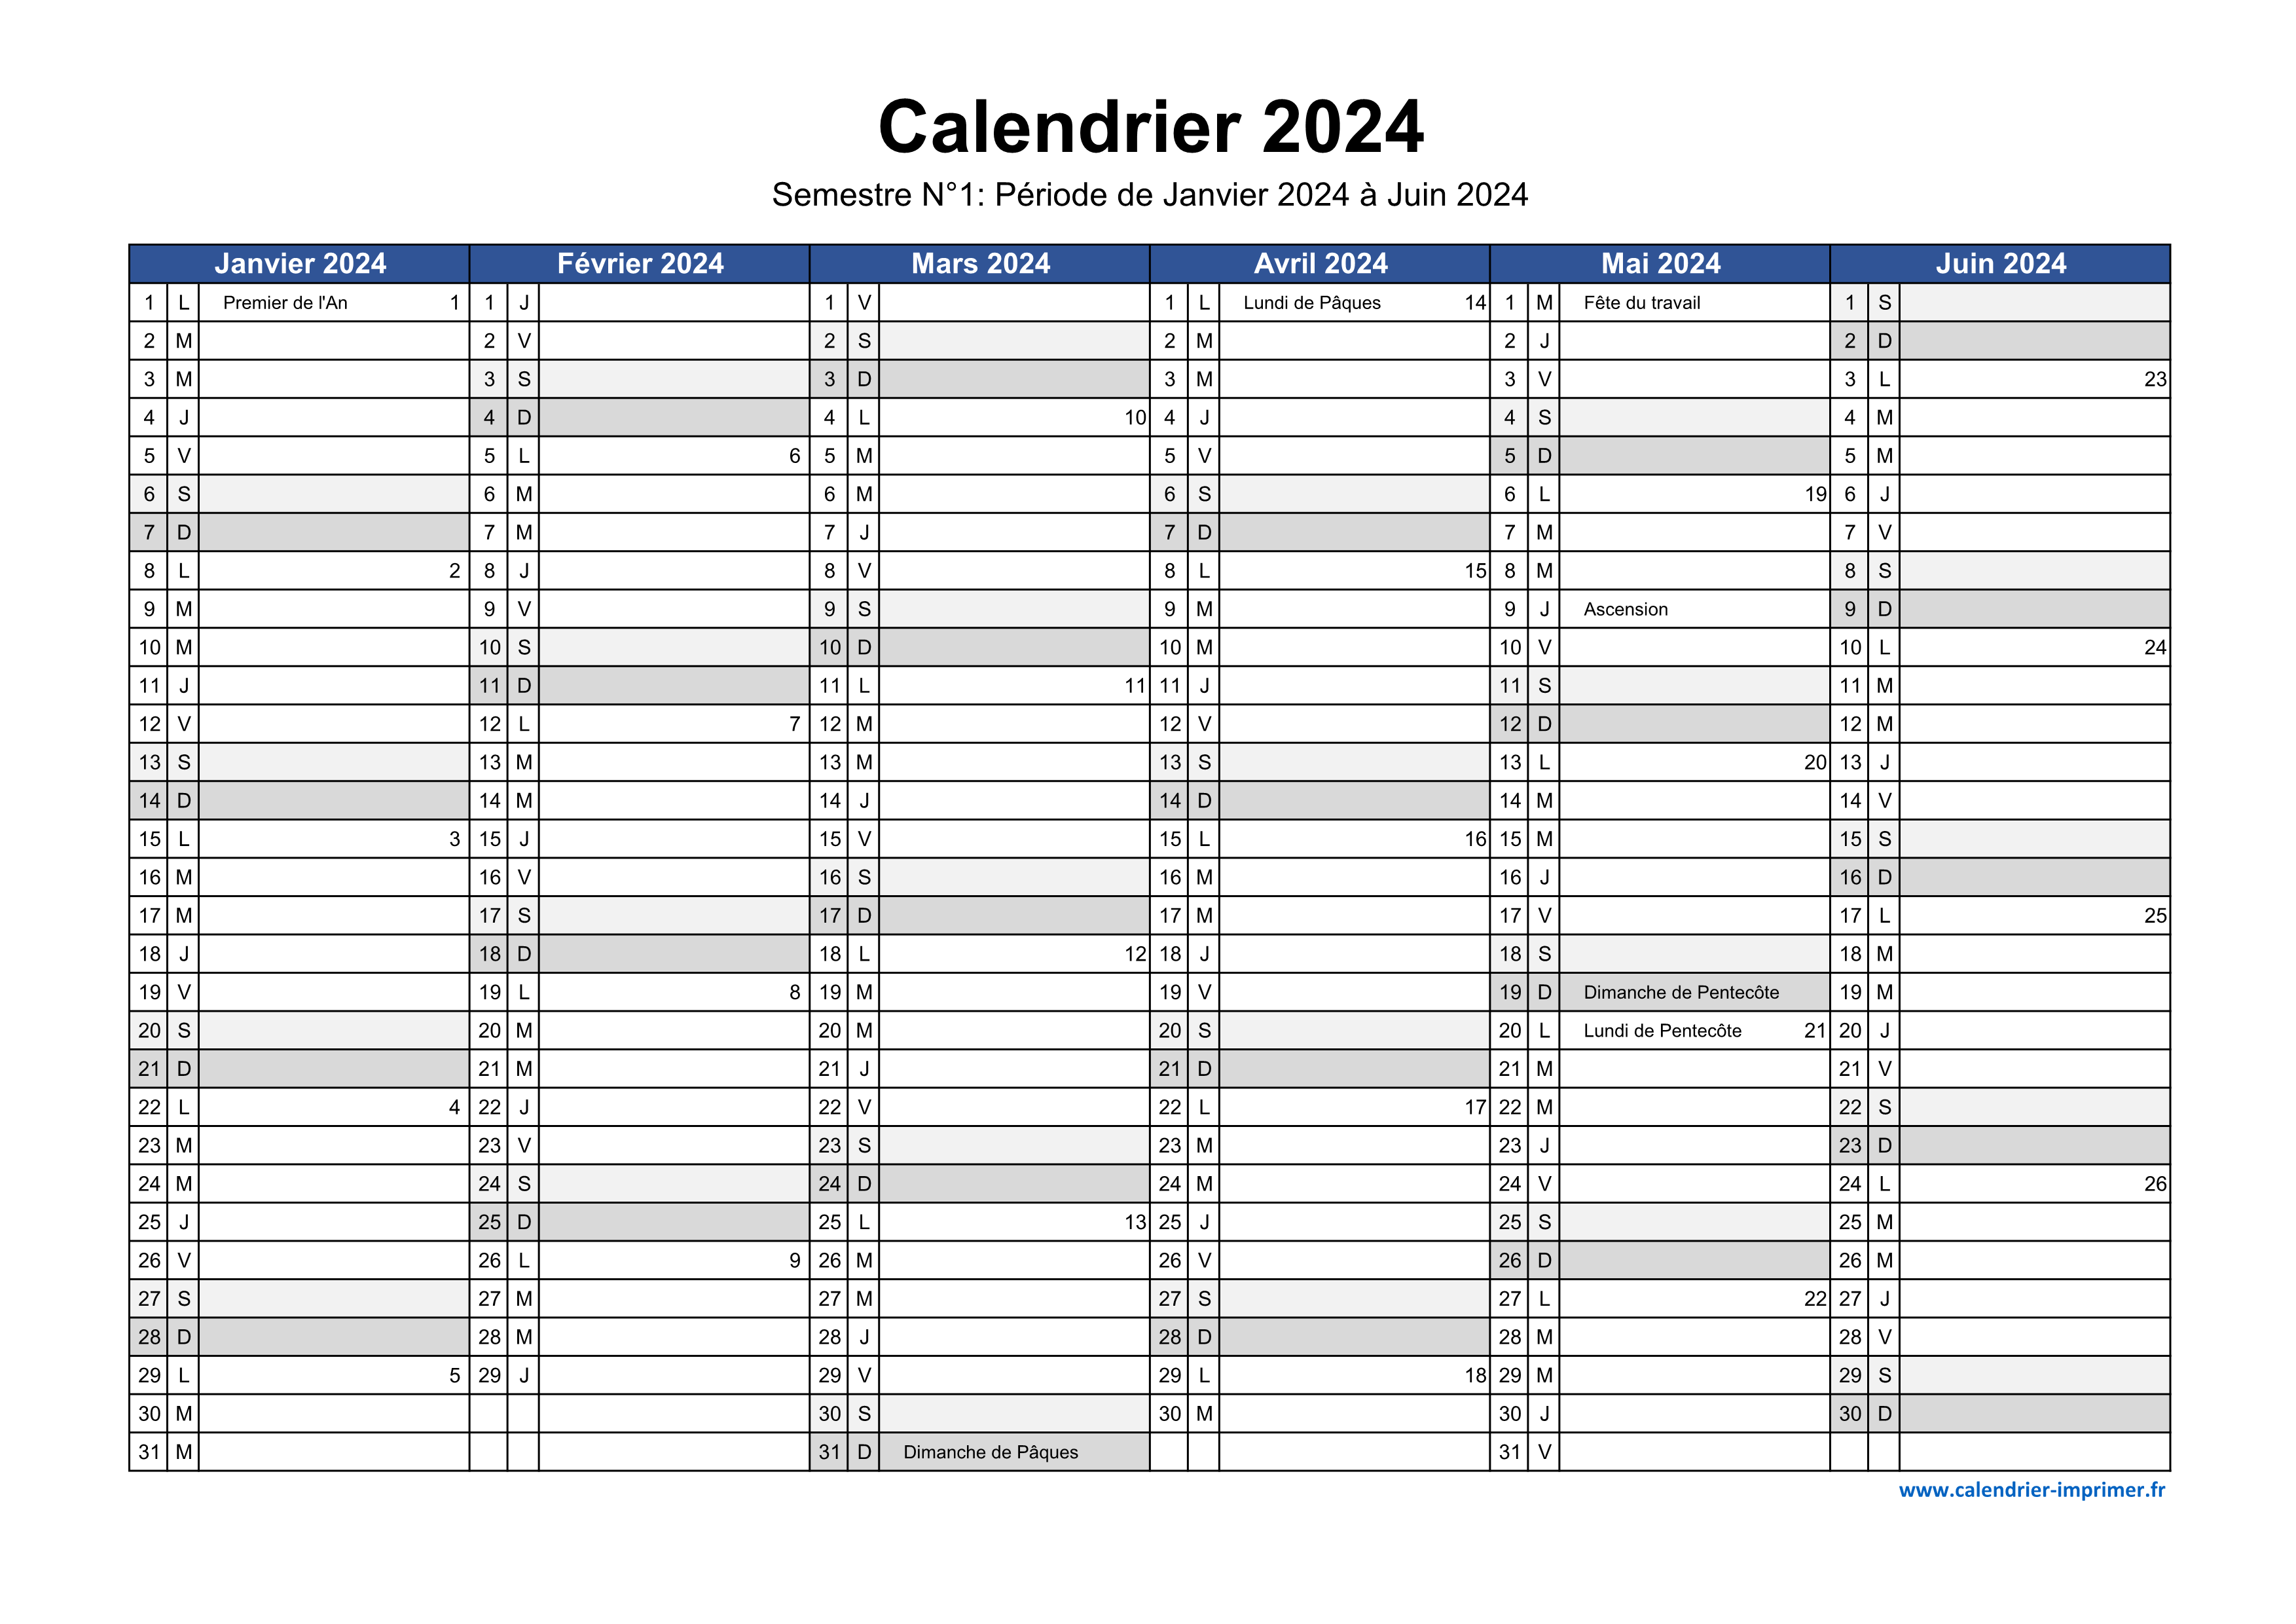 Calendrier mensuel 2023-2024 à imprimer